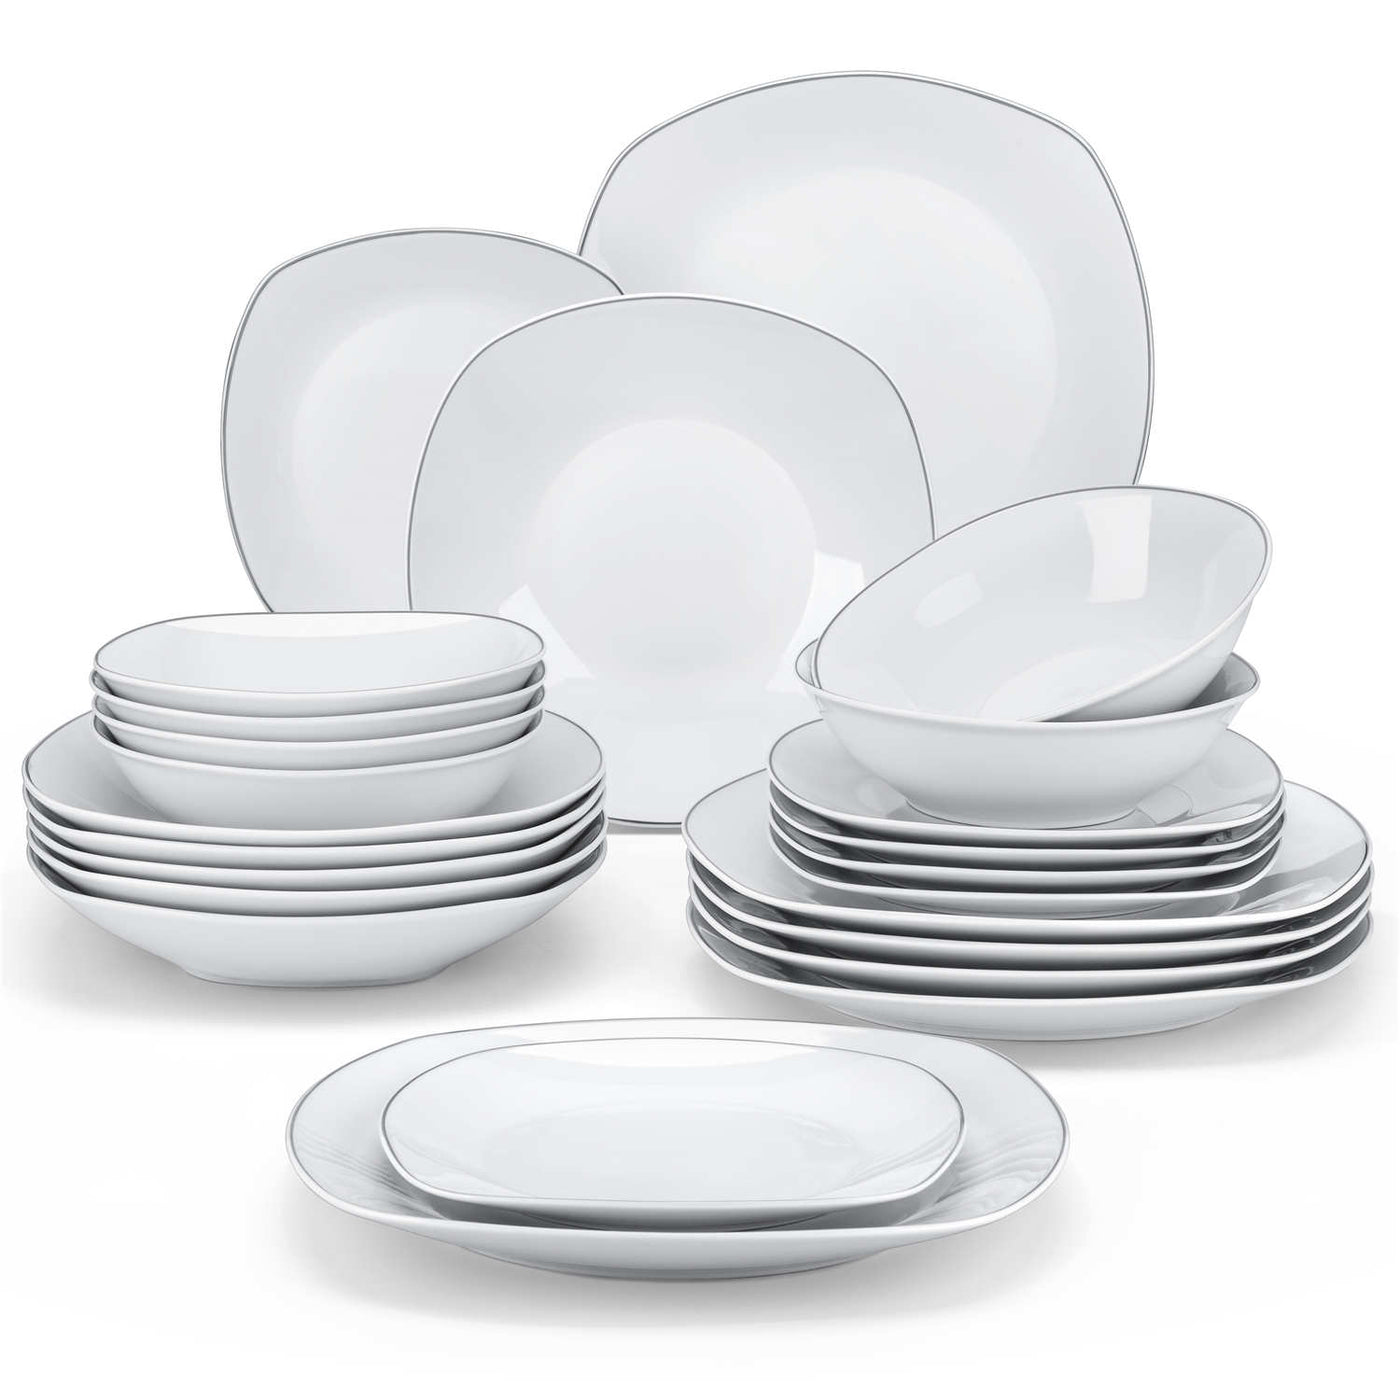 MALACASA Porcelain China Dinnerware Set - Service for 2